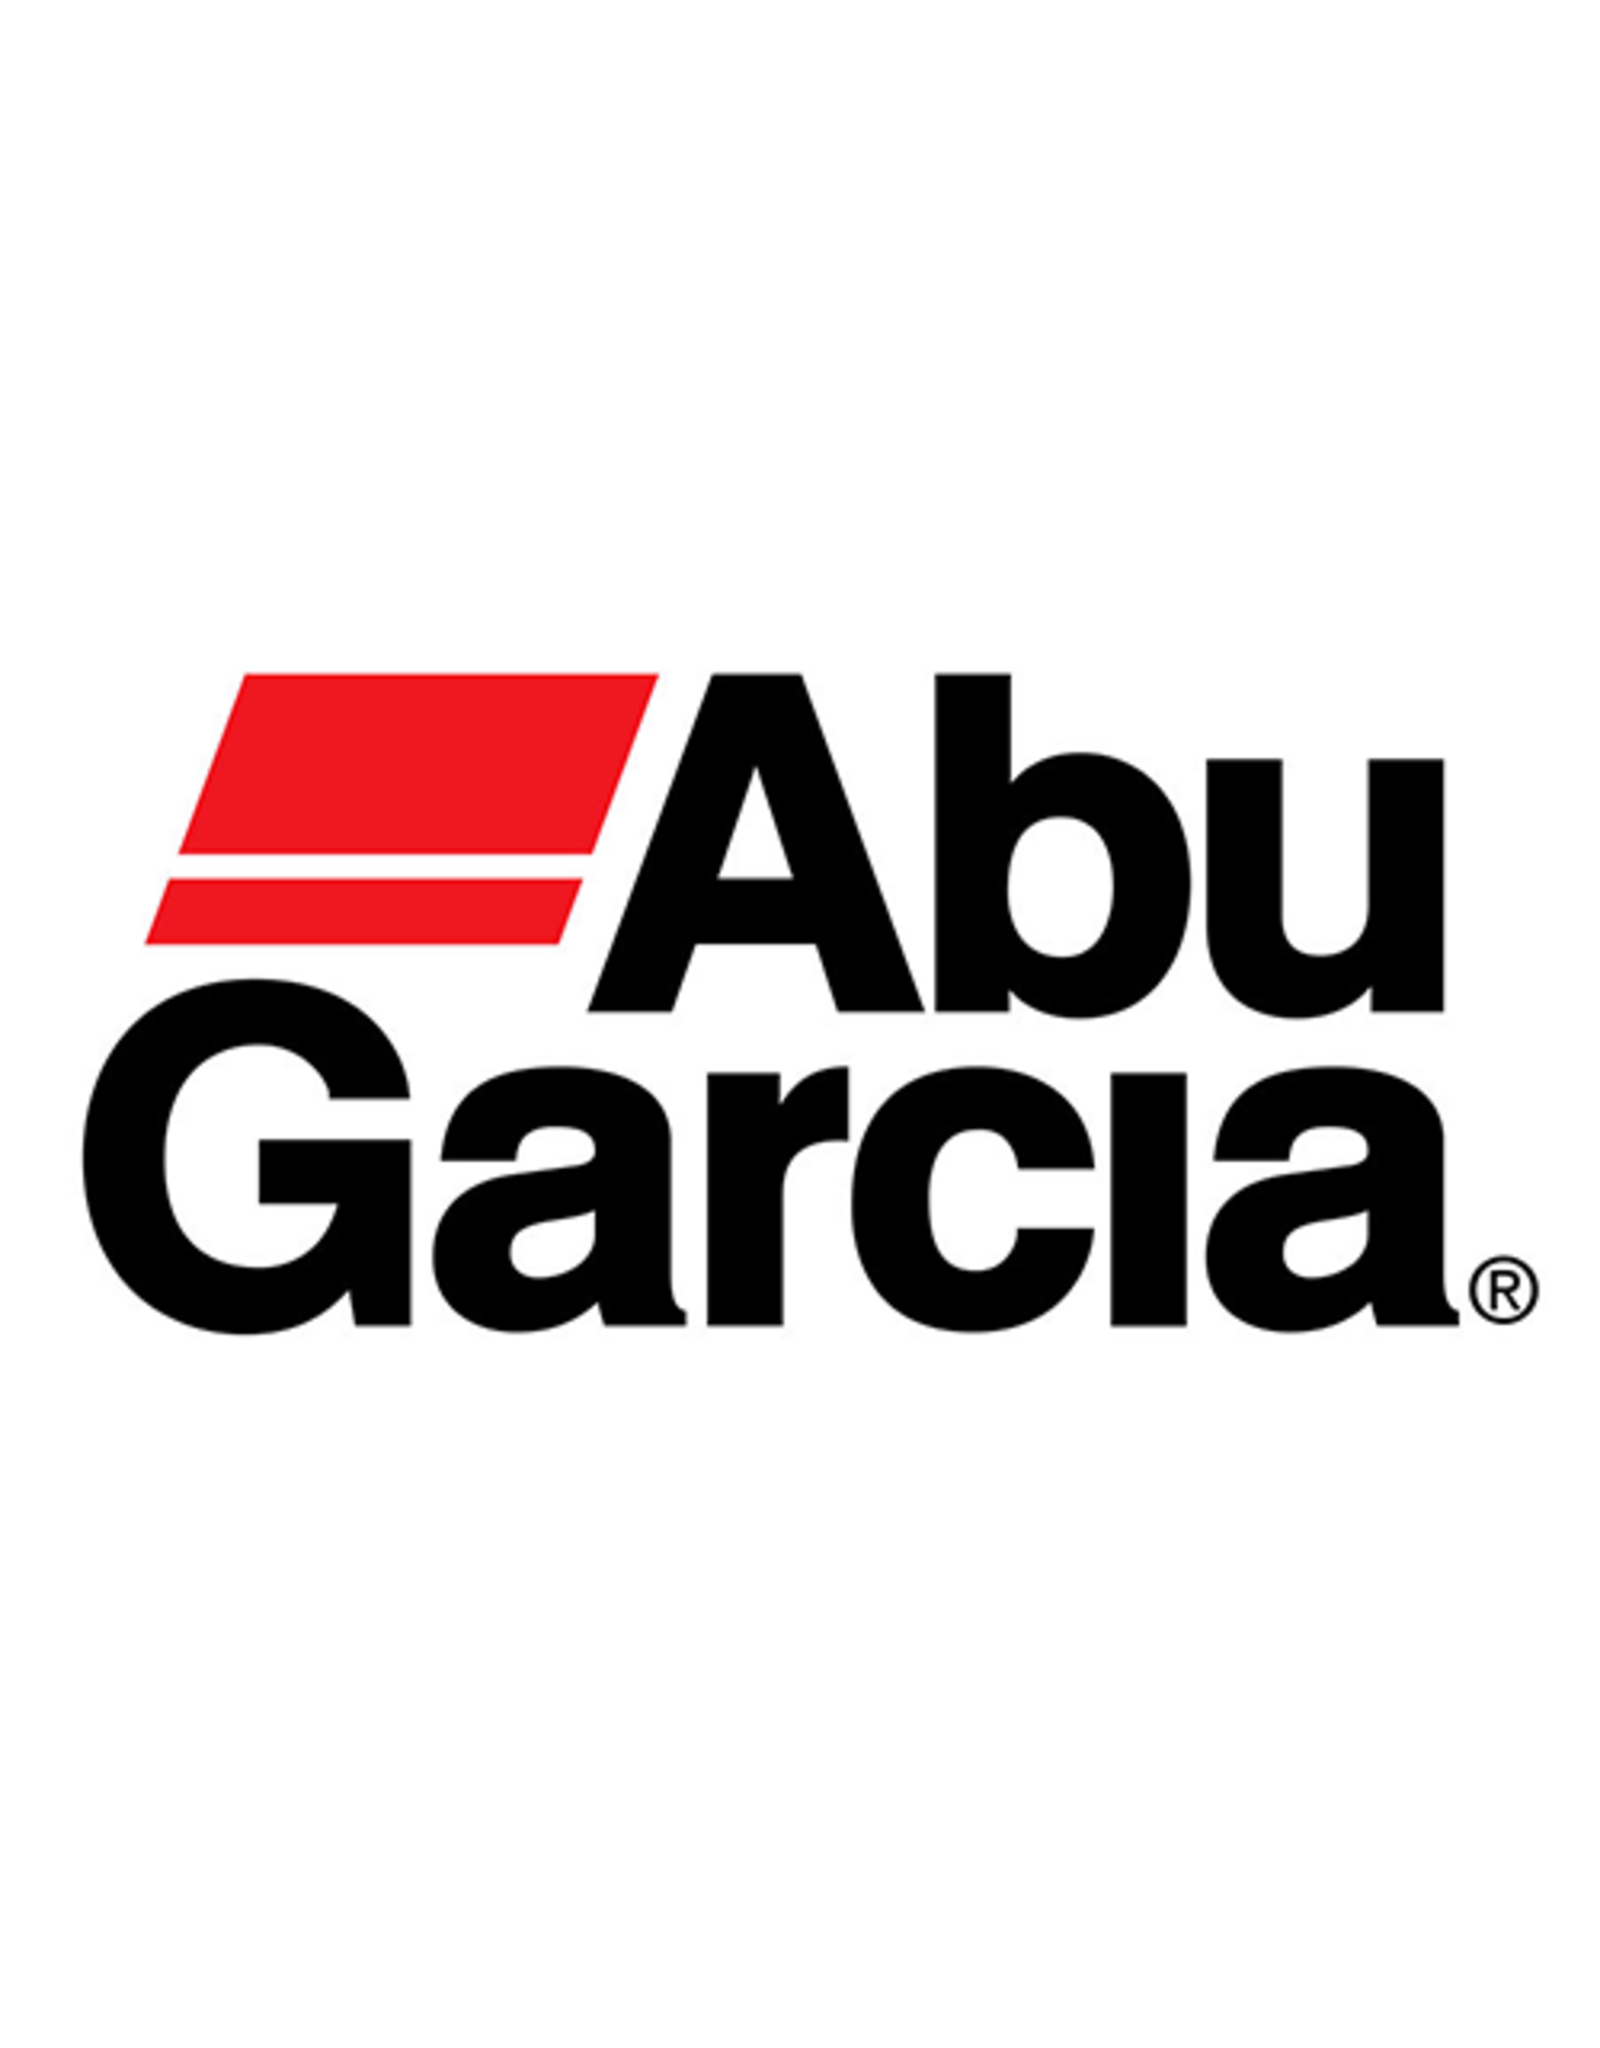 Abu Garcia 23387  CLICK SWITCH/NLA